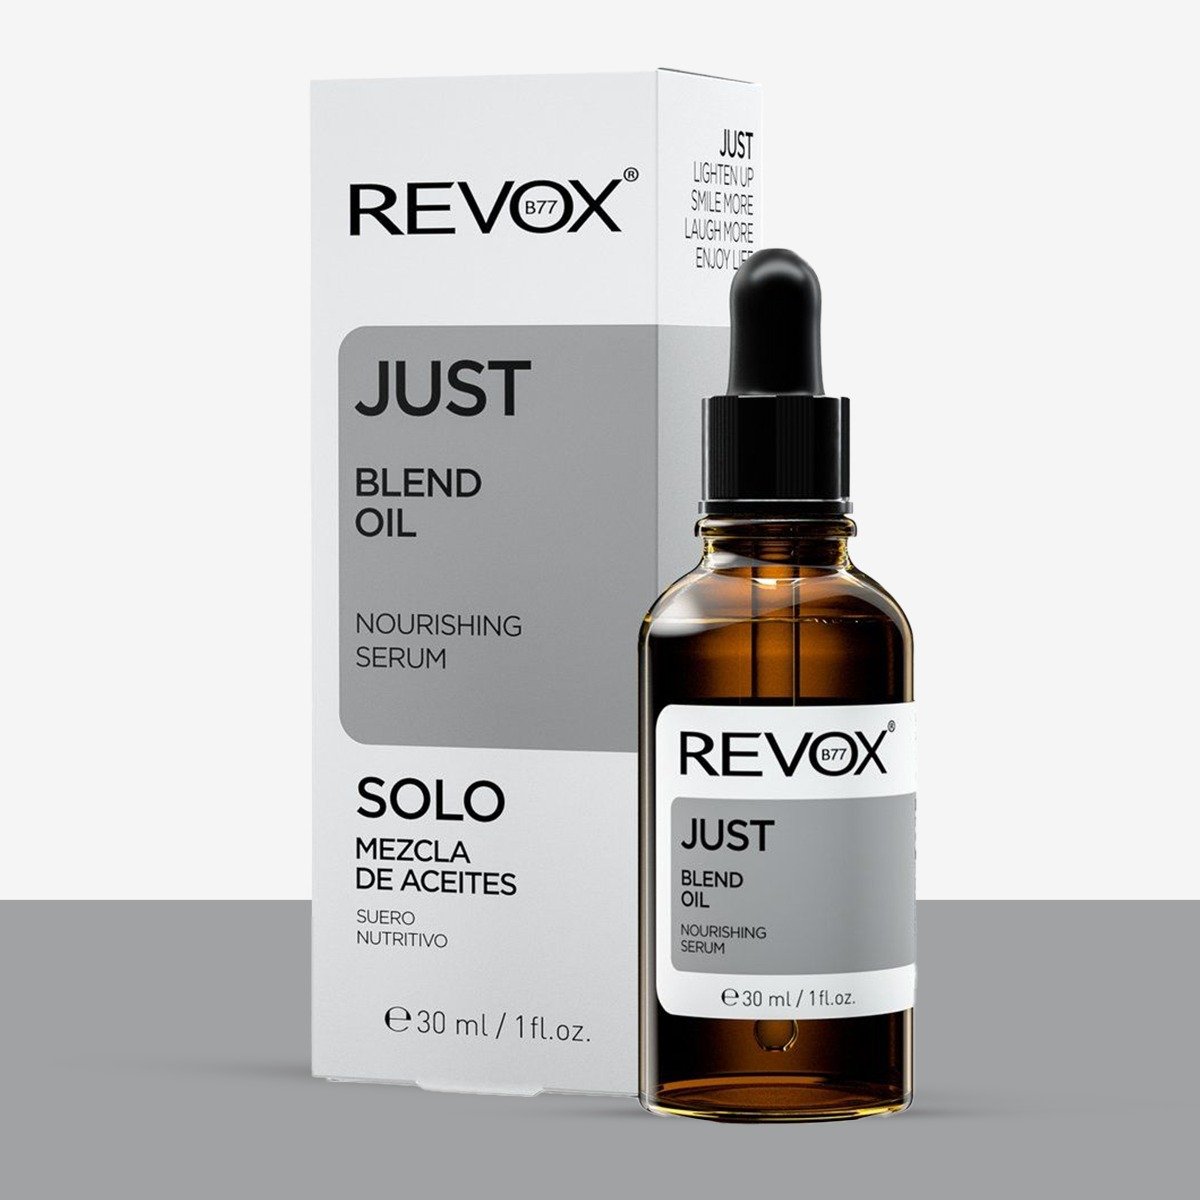 Revox Just Blend Oil Nourishing Serum